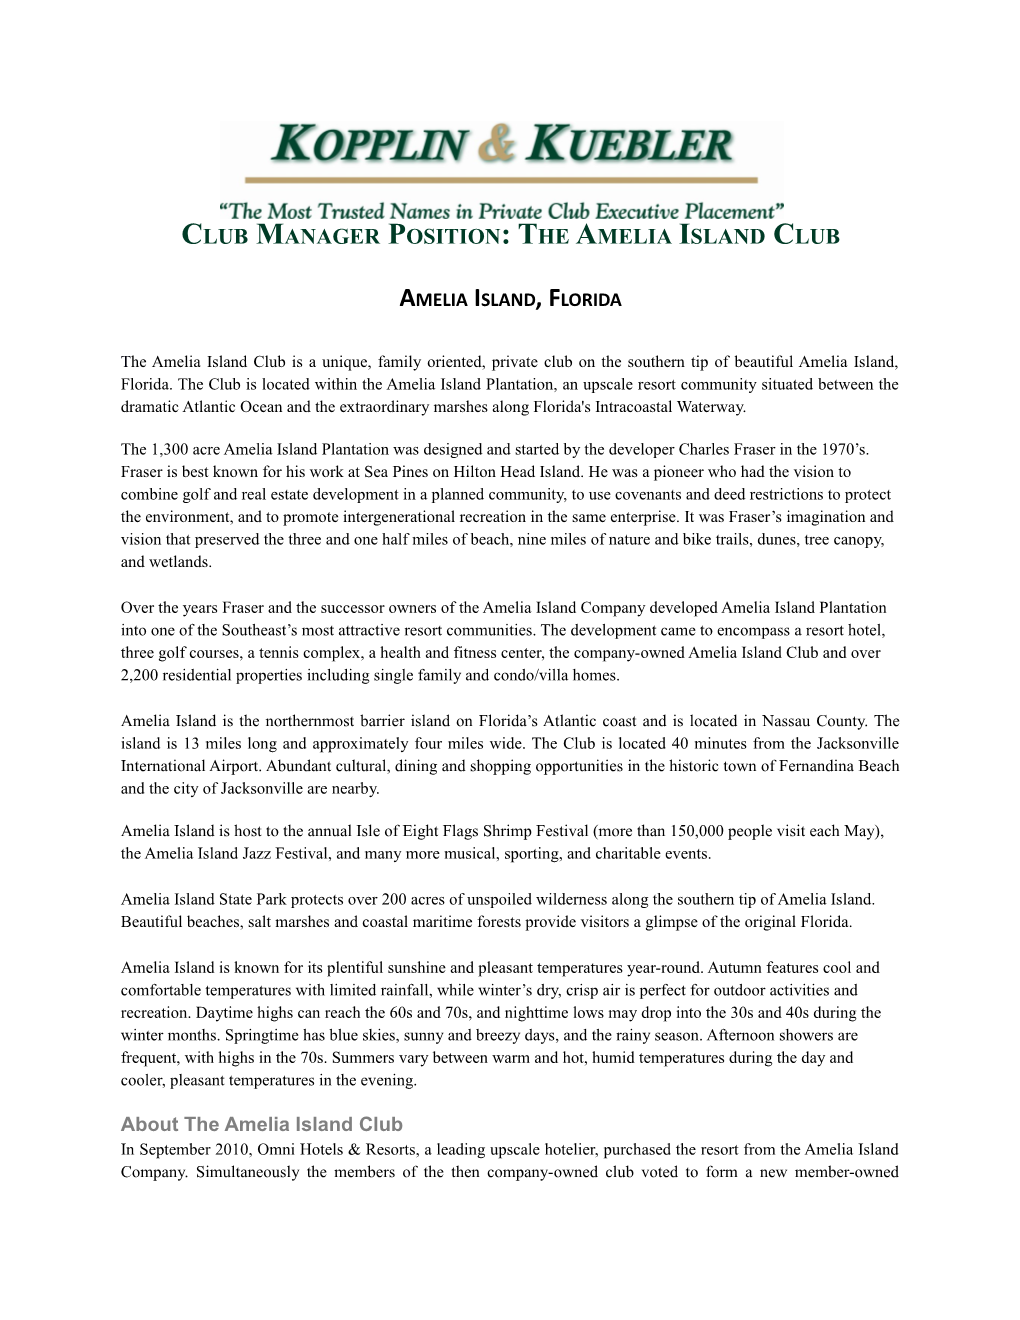 Club Manager Position: the Amelia Island Club